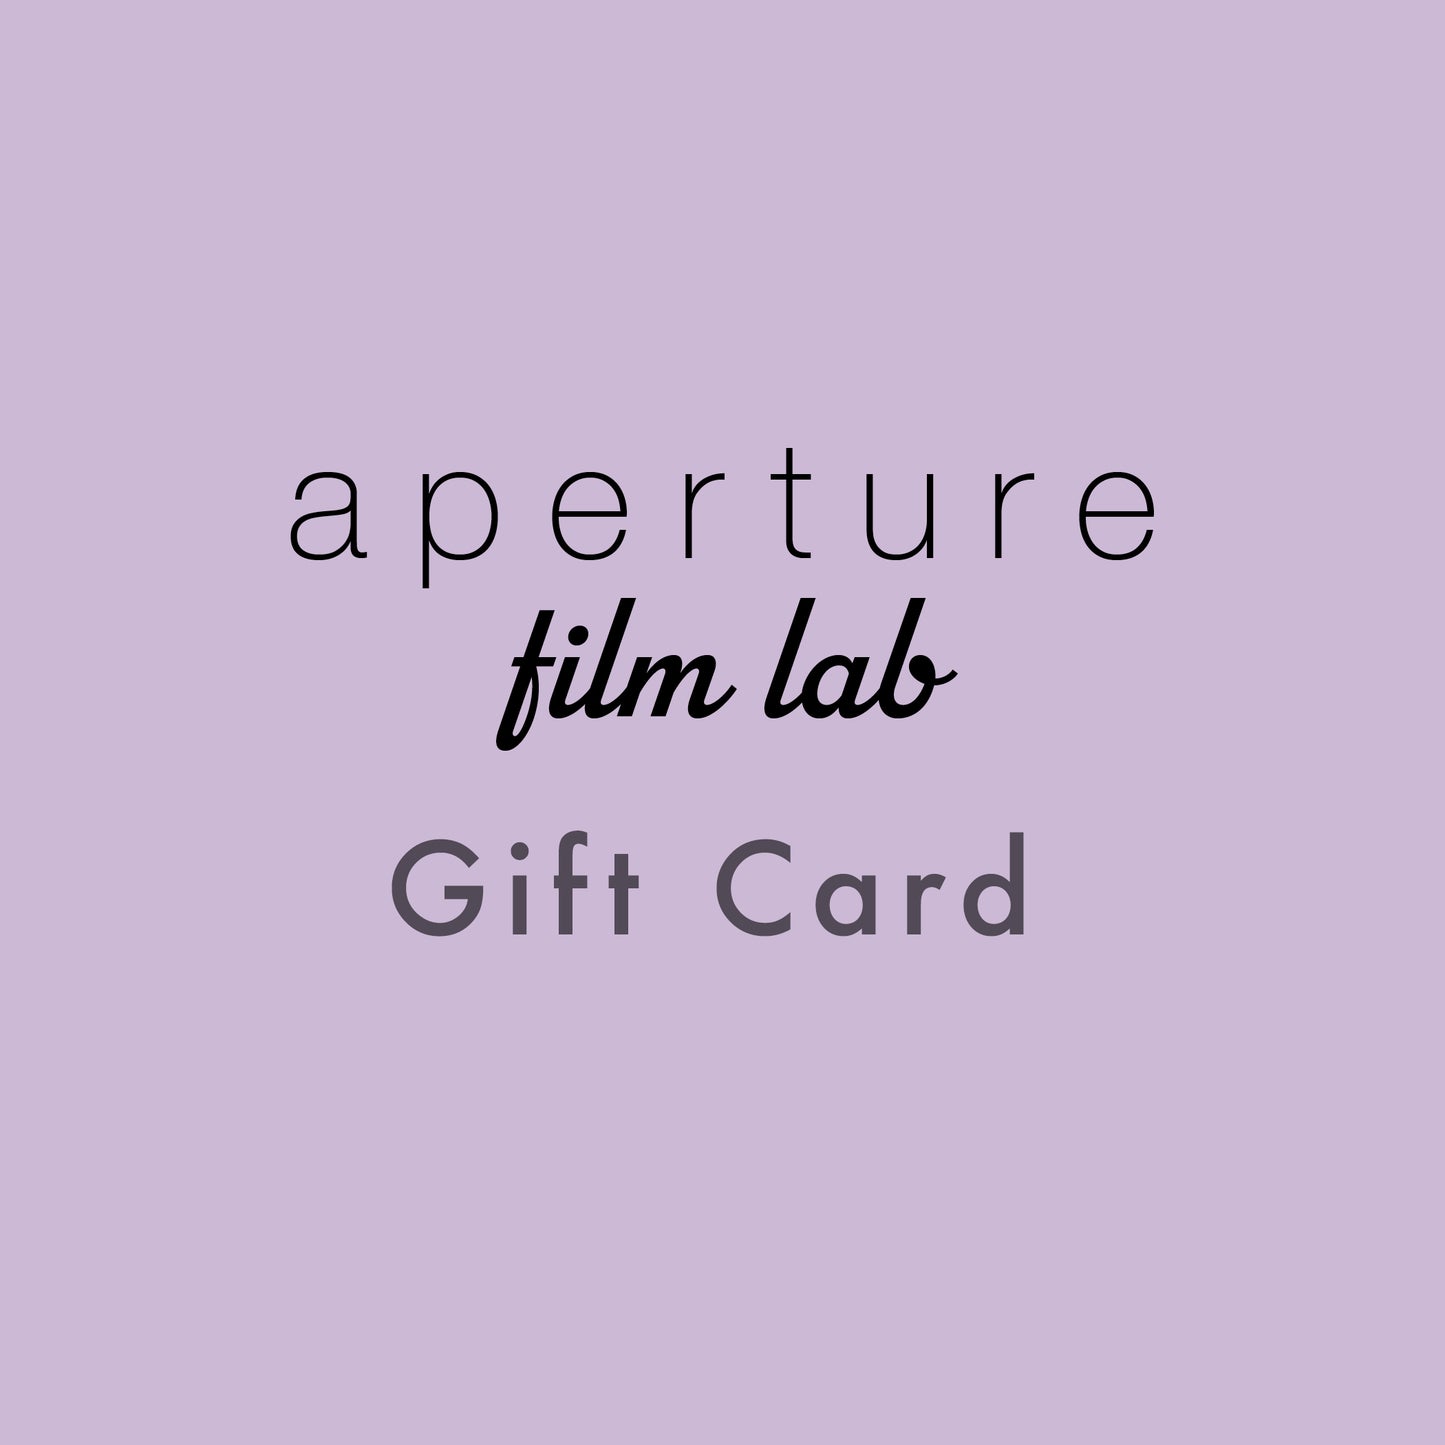 Aperture Film Lab Gift Card